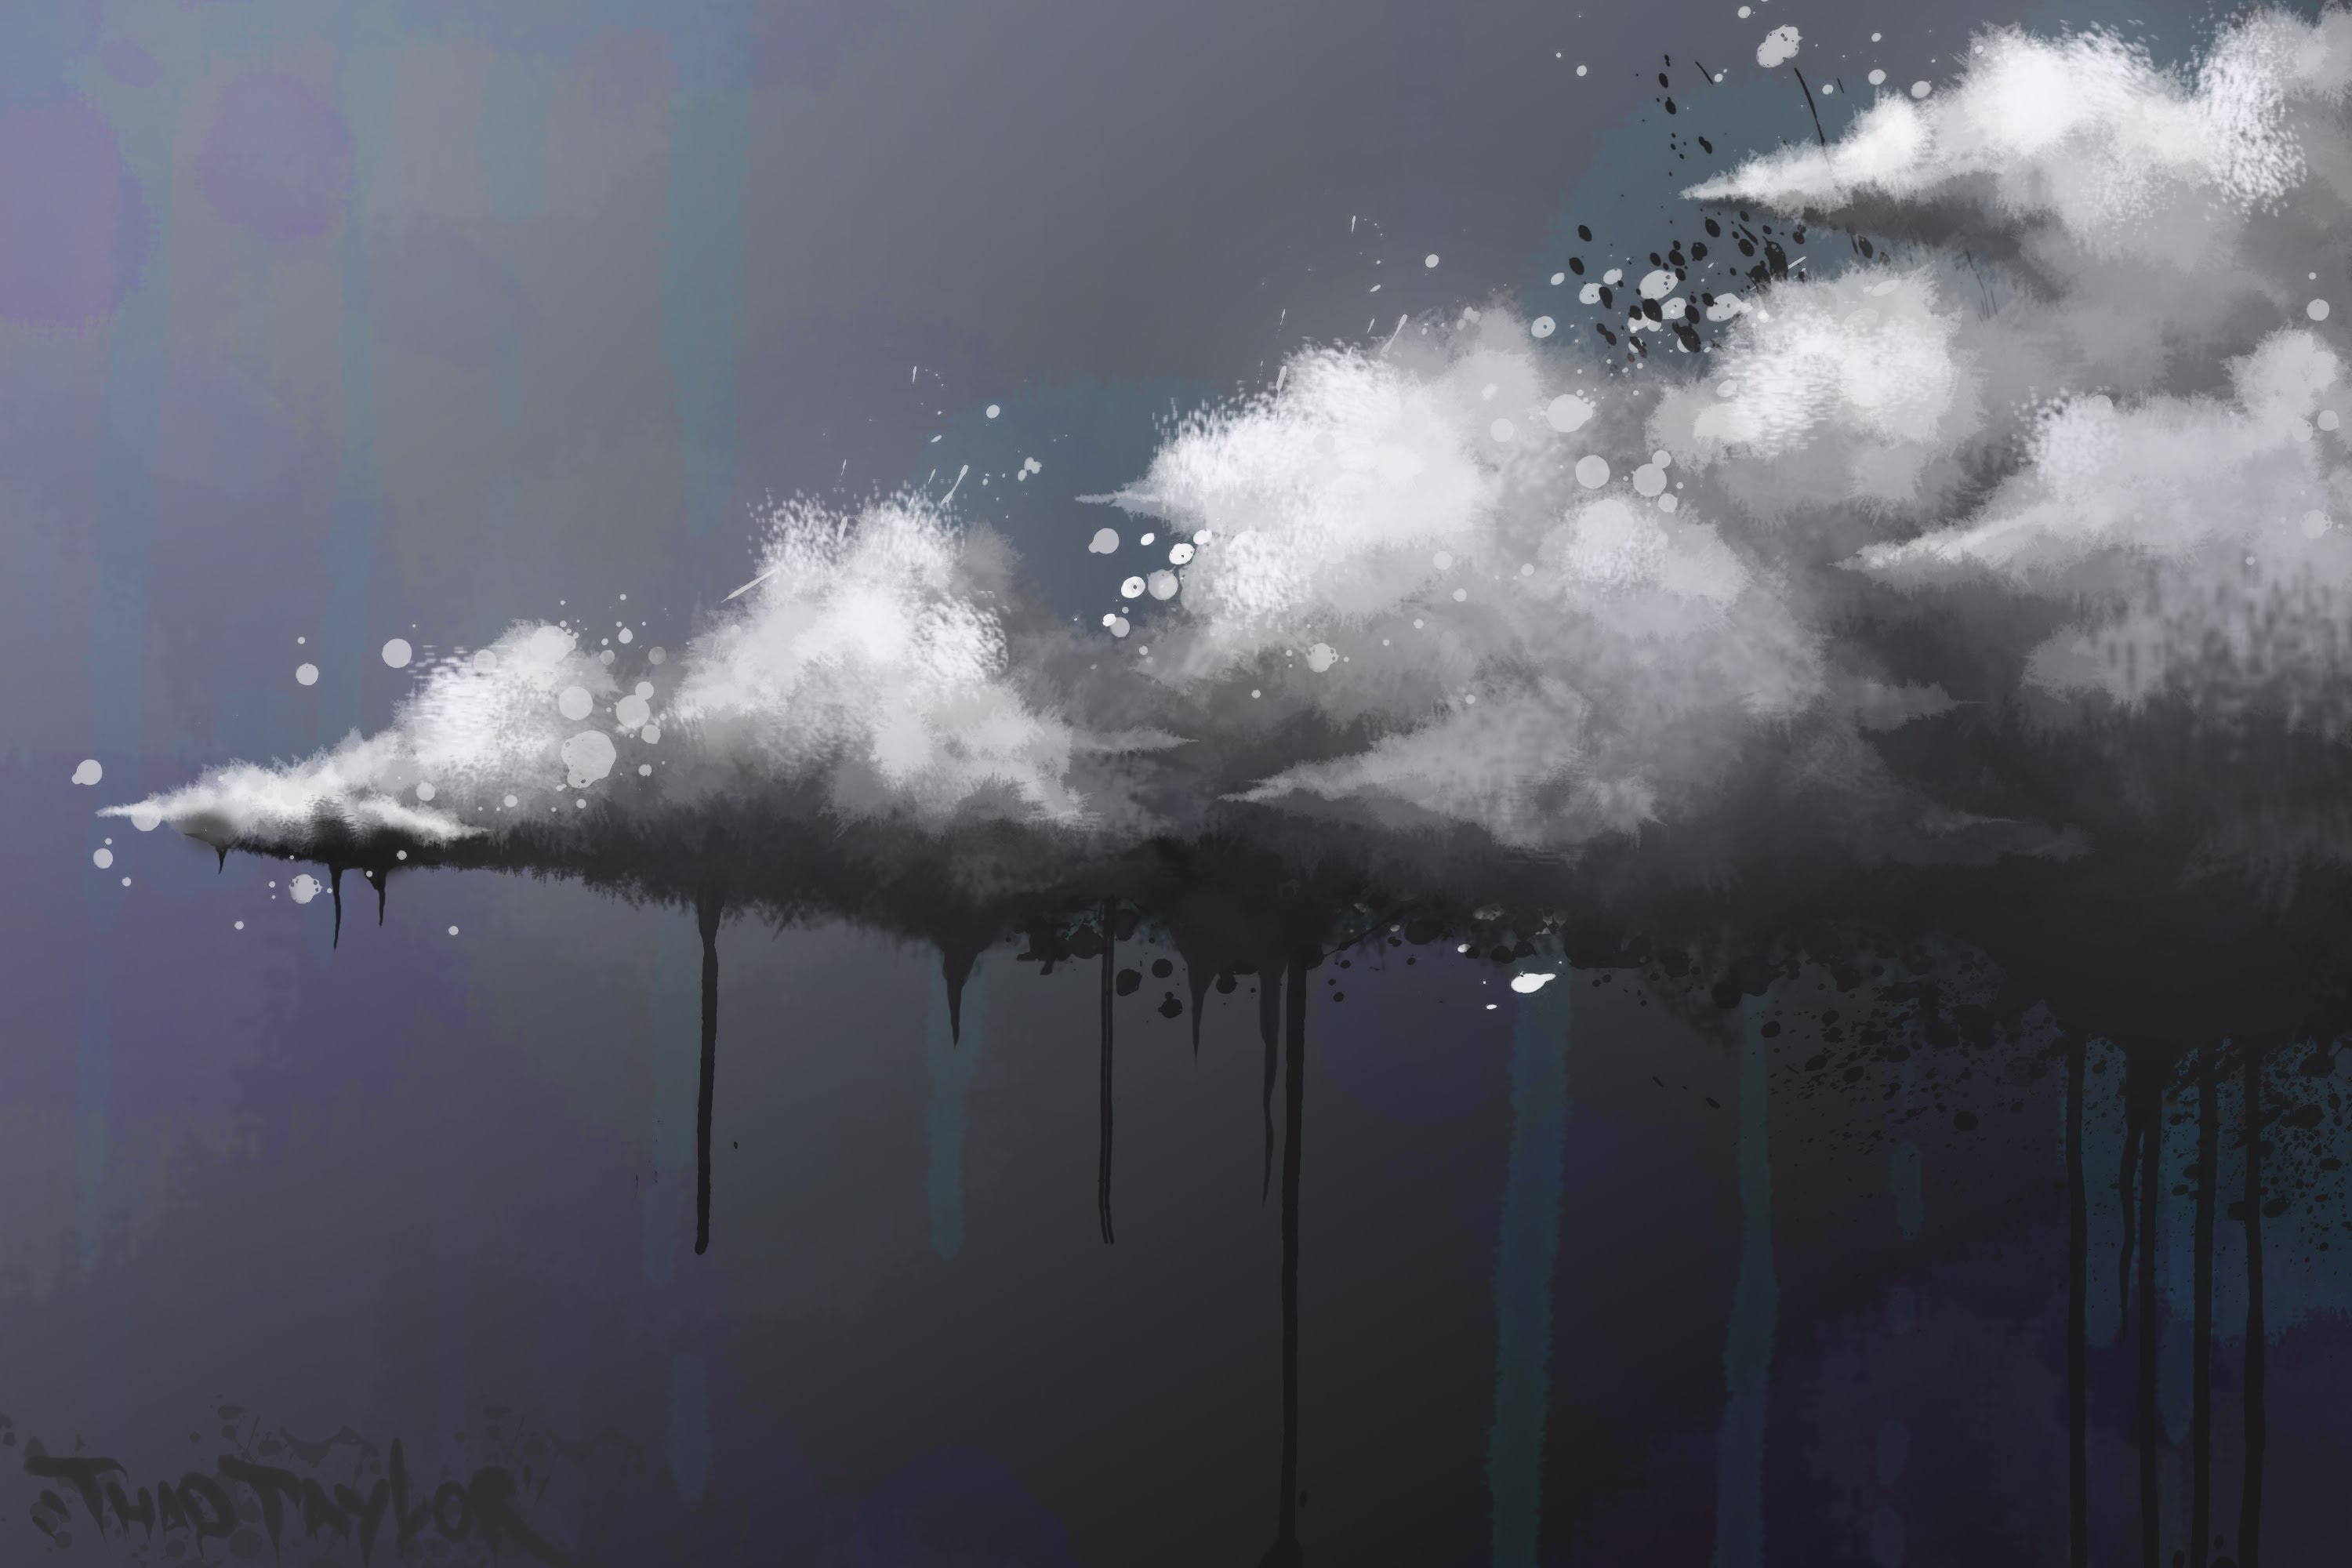 2002r rain cloud. Облака арт. Тучи арт. Облако с дождем арт. Грозовые тучи арт.